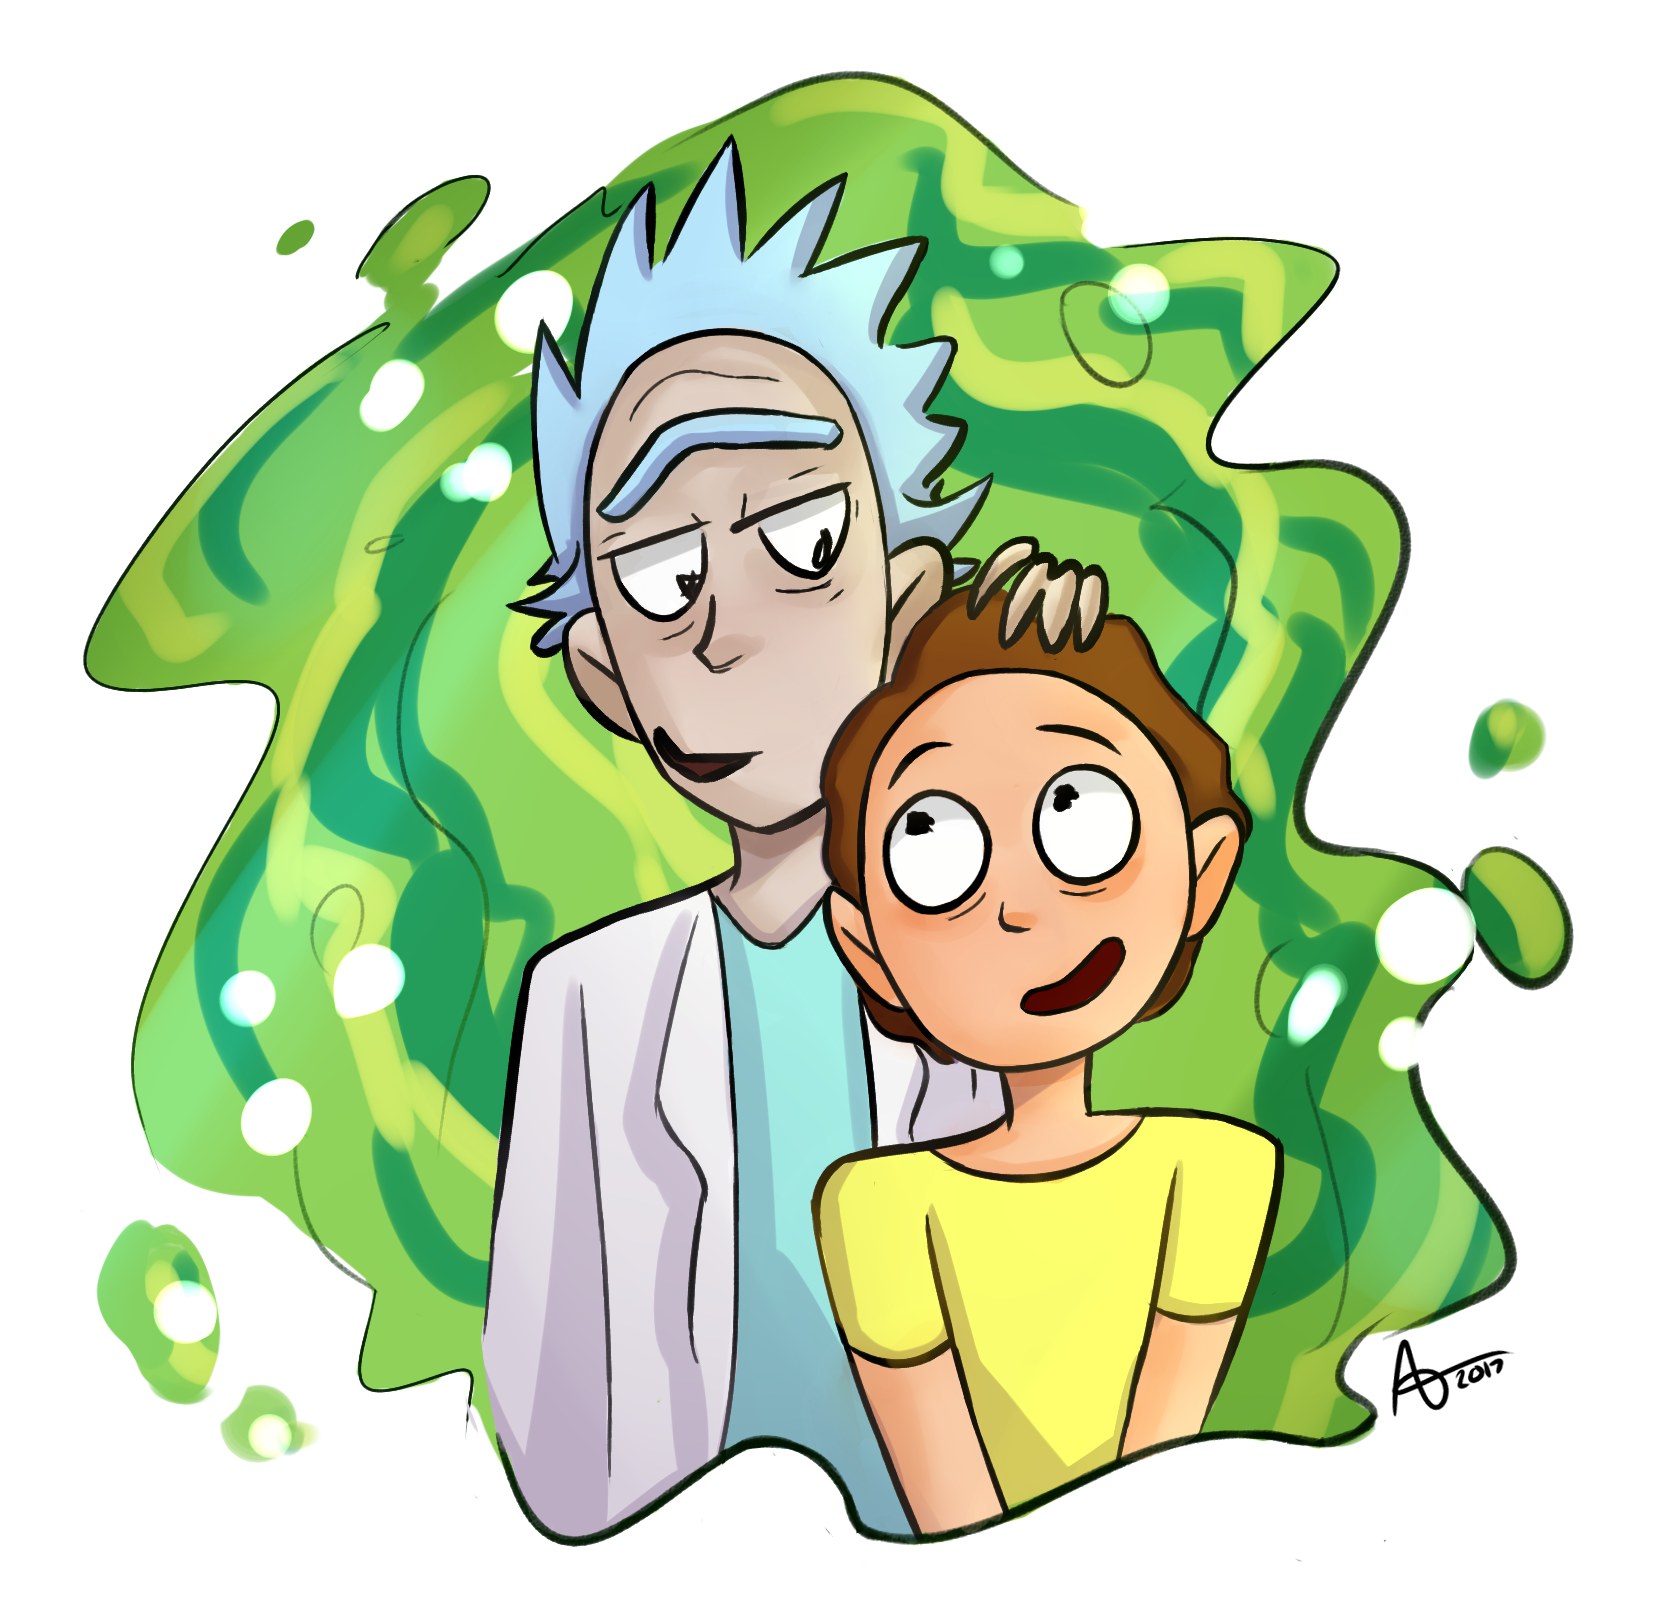 Rick And Morty by apanda54 on DeviantArt.